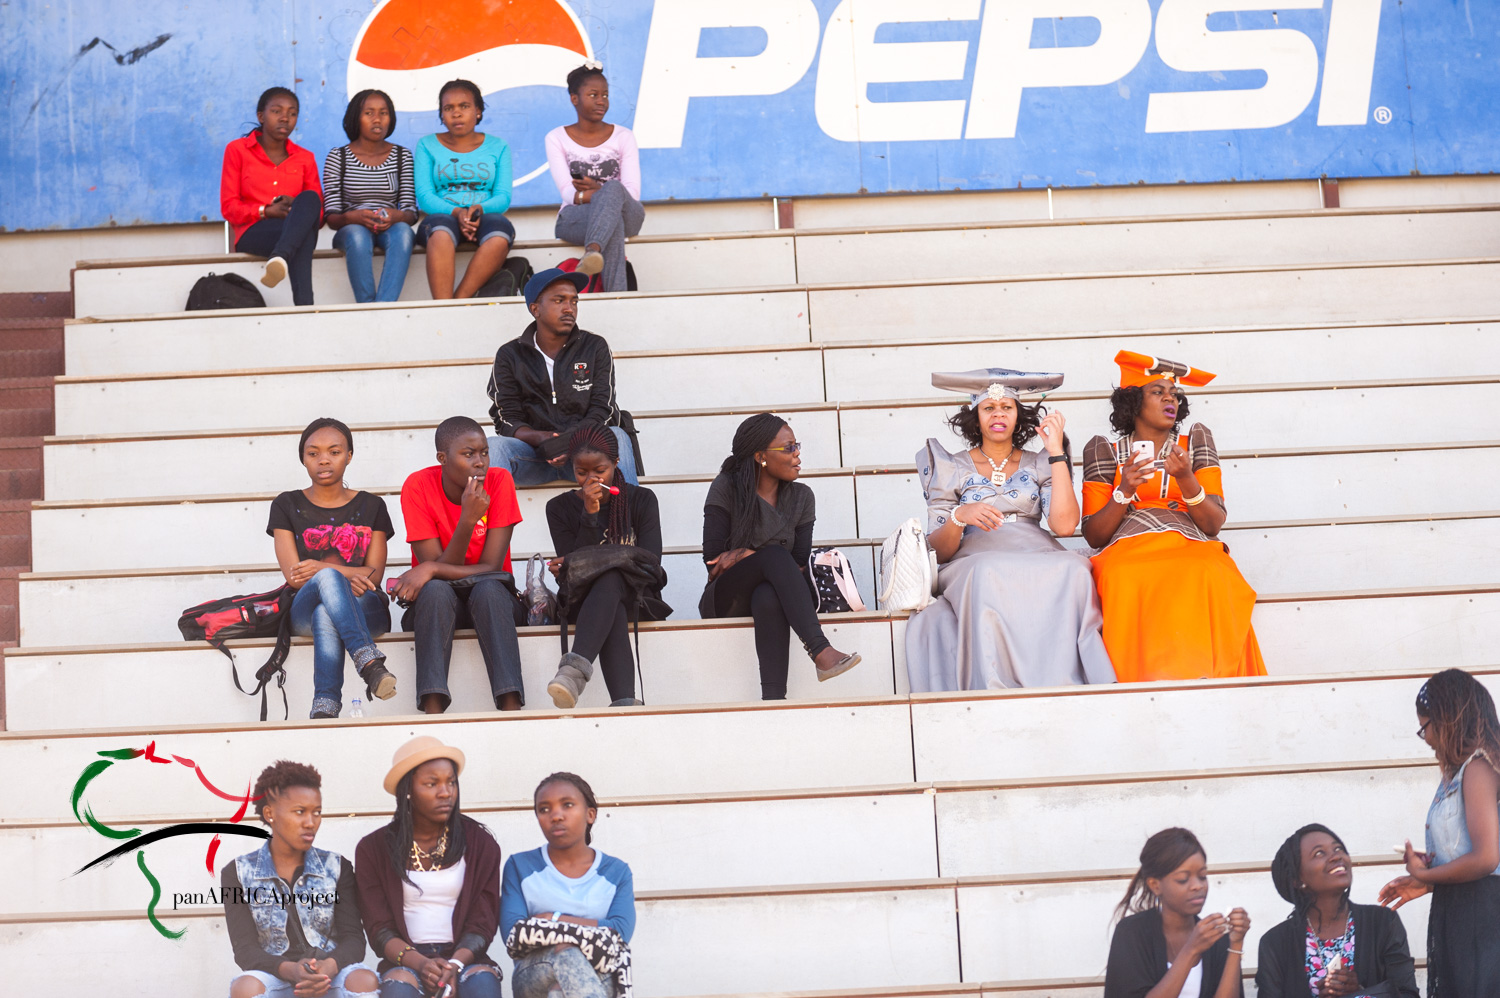 Spectators sitting on a grandstand.